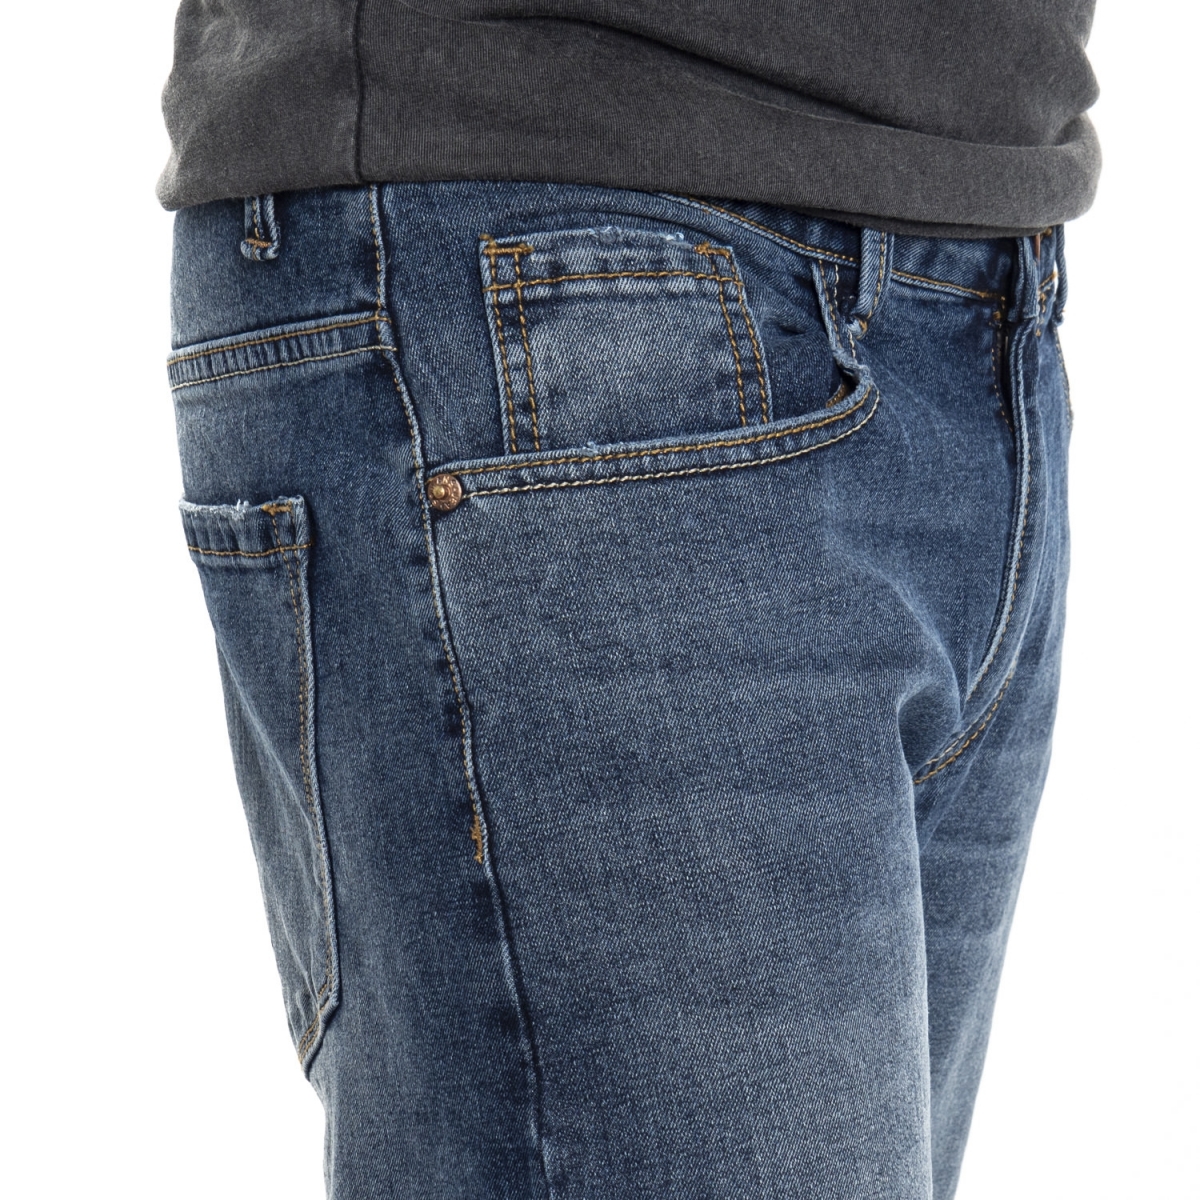 abbigliamento Jeans uomo Jeans Slim Fit ATM1088-8 LANDEK PARK Cafedelmar Shop